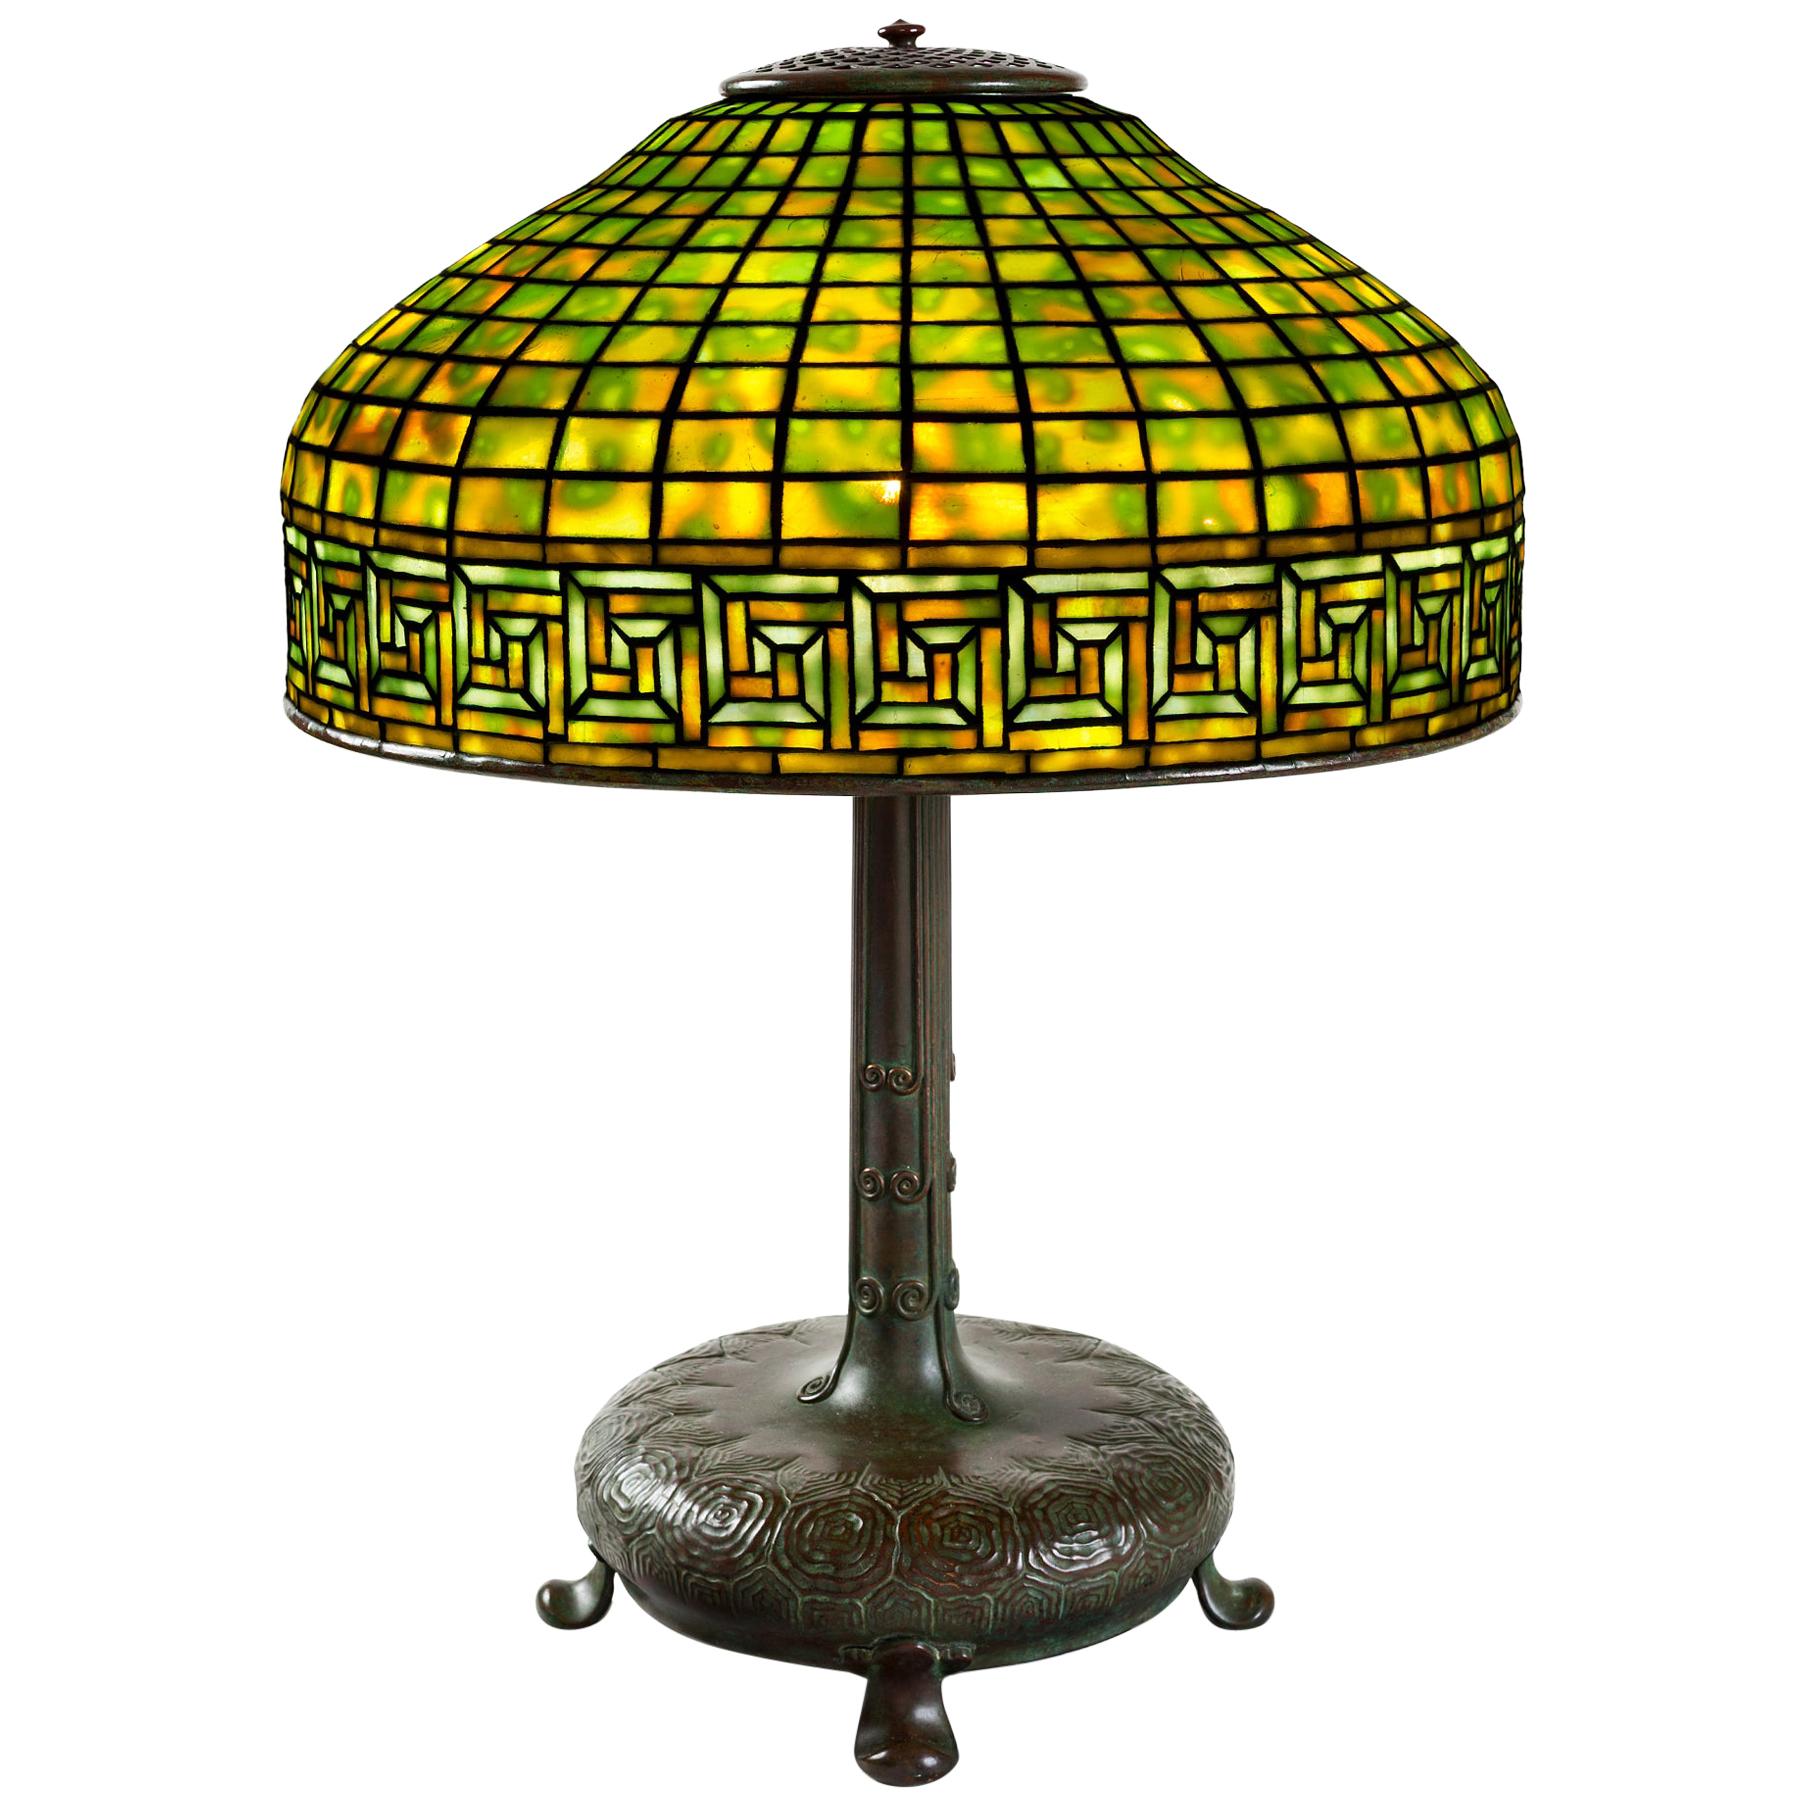 Tiffany Studios New York "Greek Key" Table Lamp